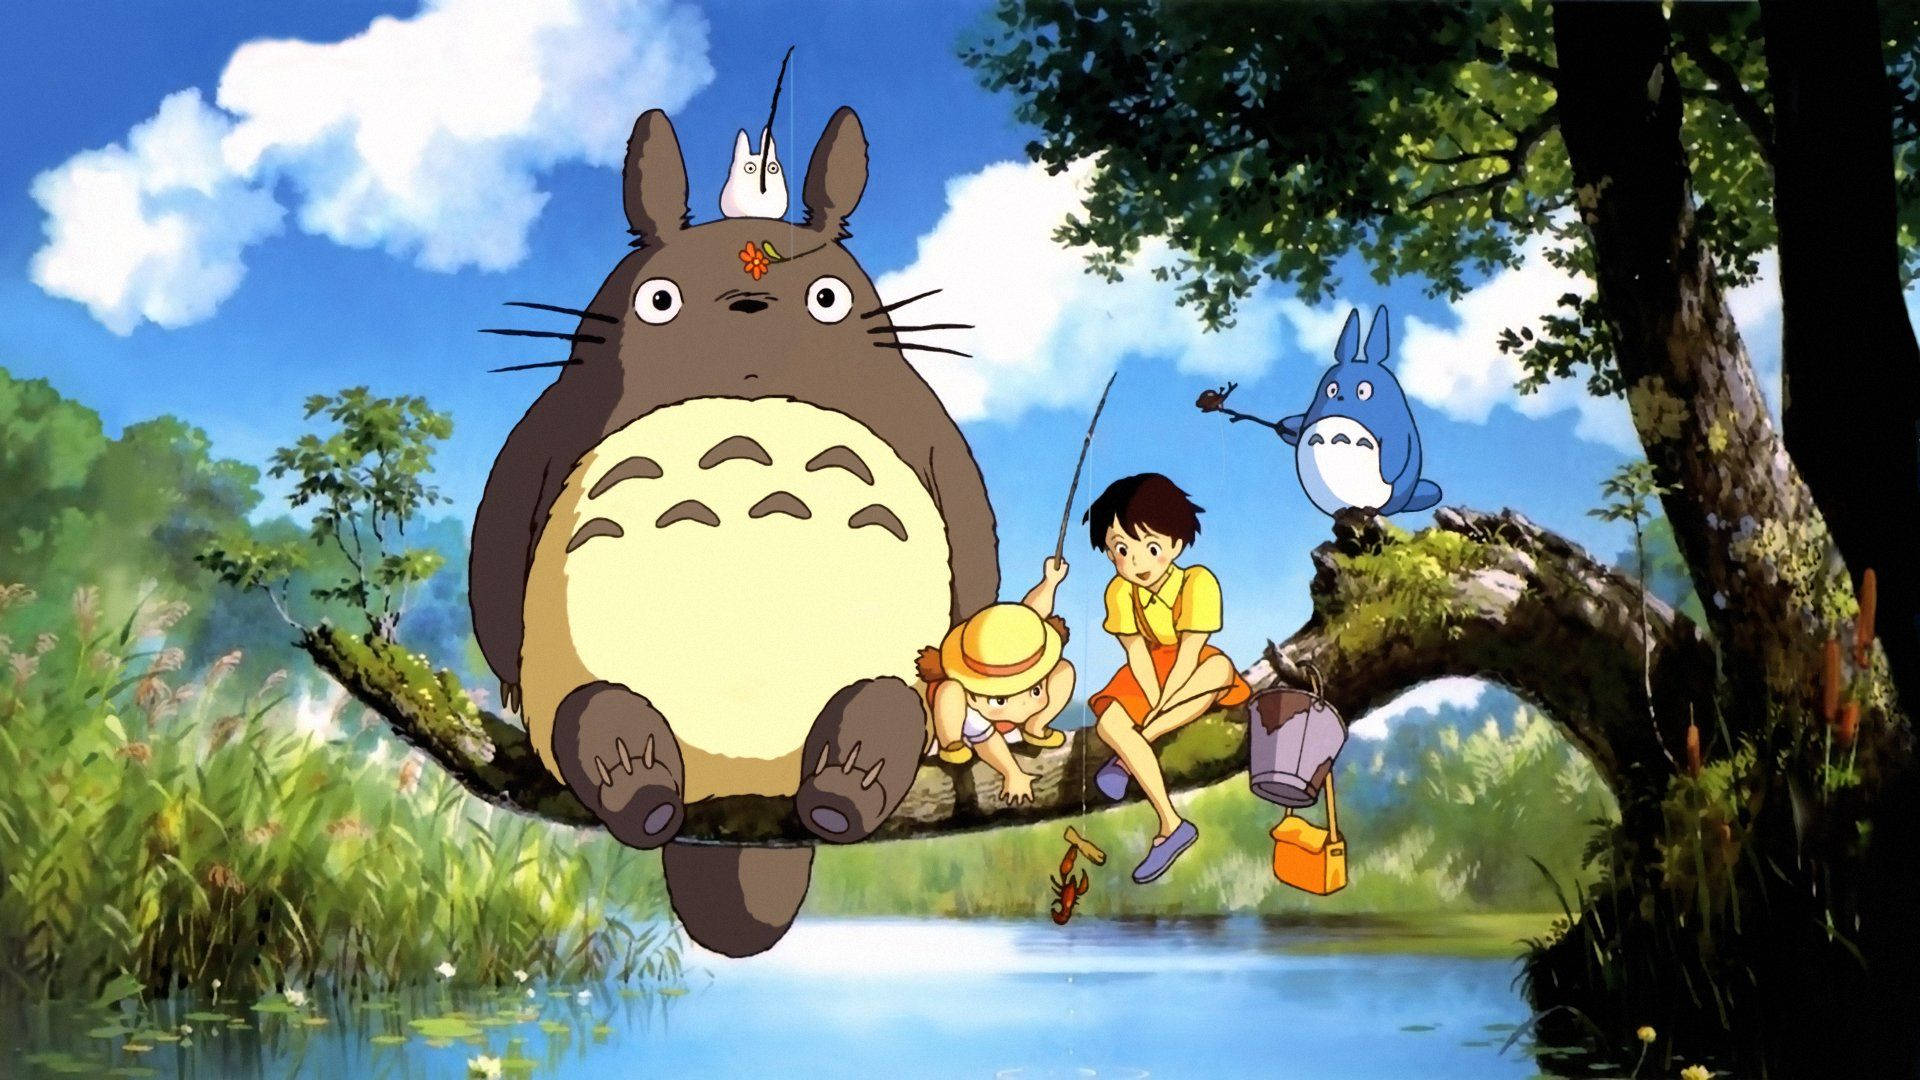 Top 999+ Totoro Wallpaper Full HD, 4K✅Free to Use